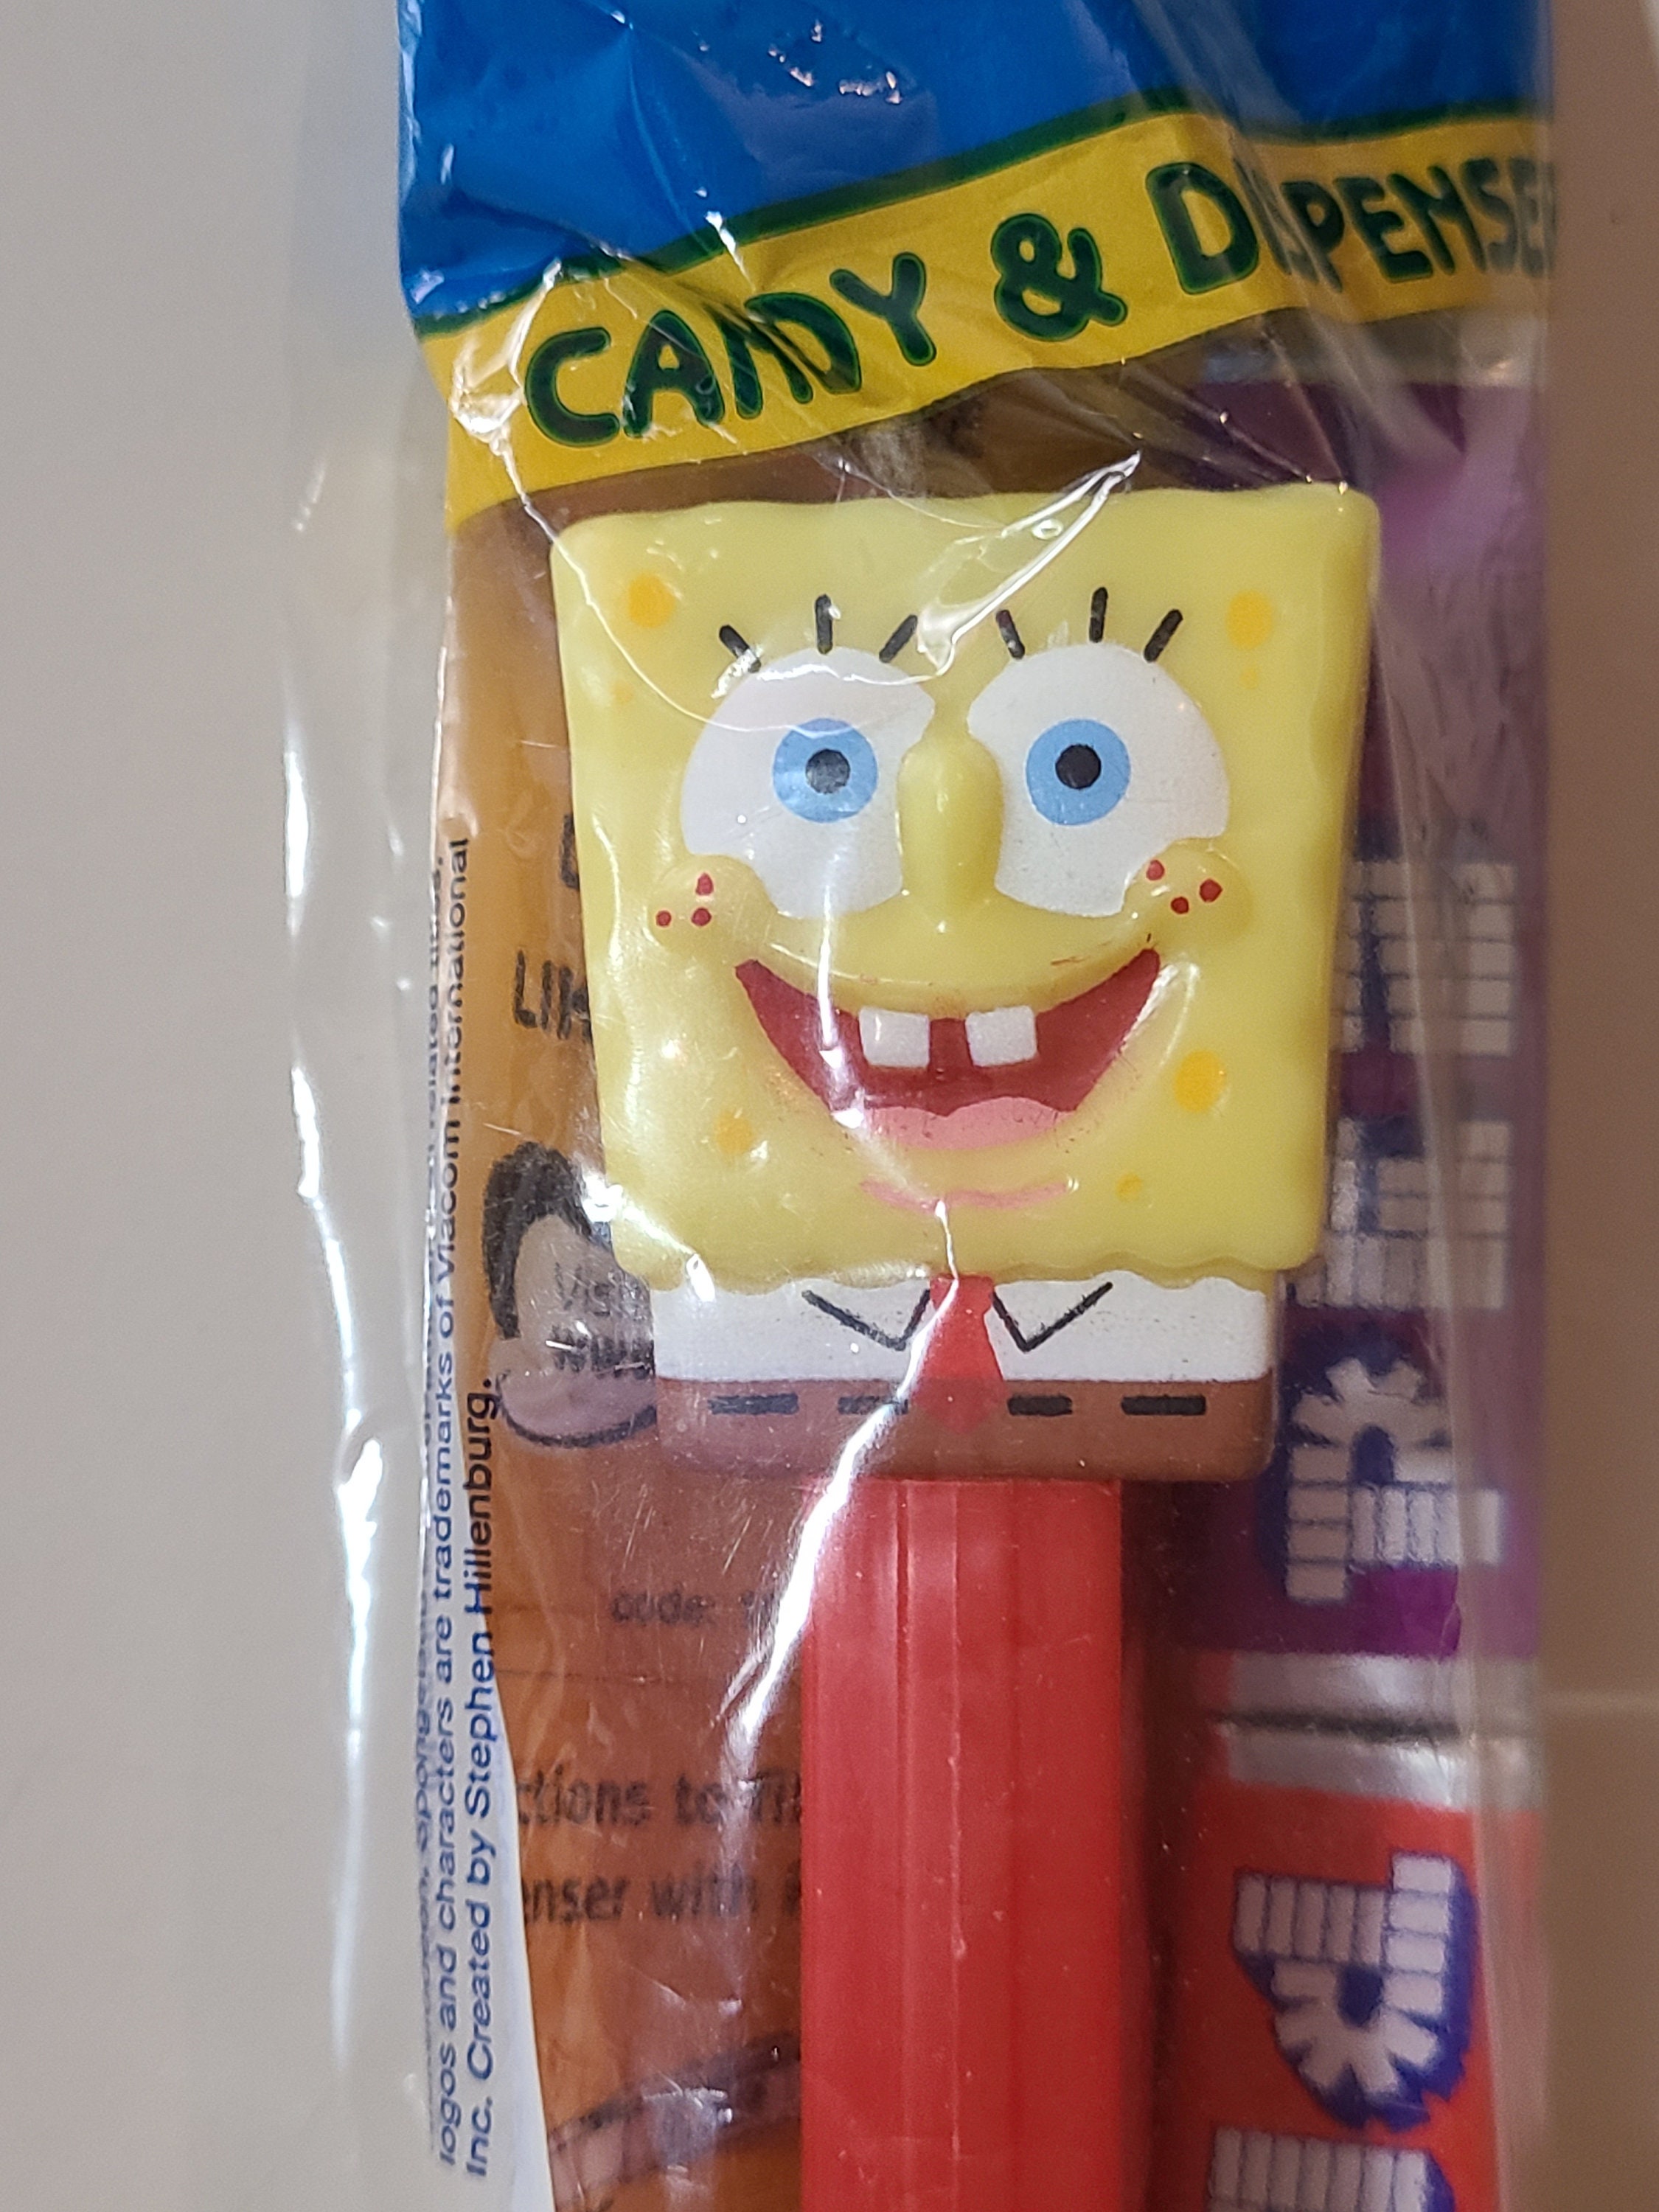 SpongeBob SquarePants PEZ Candy Packs: 12-Piece Display